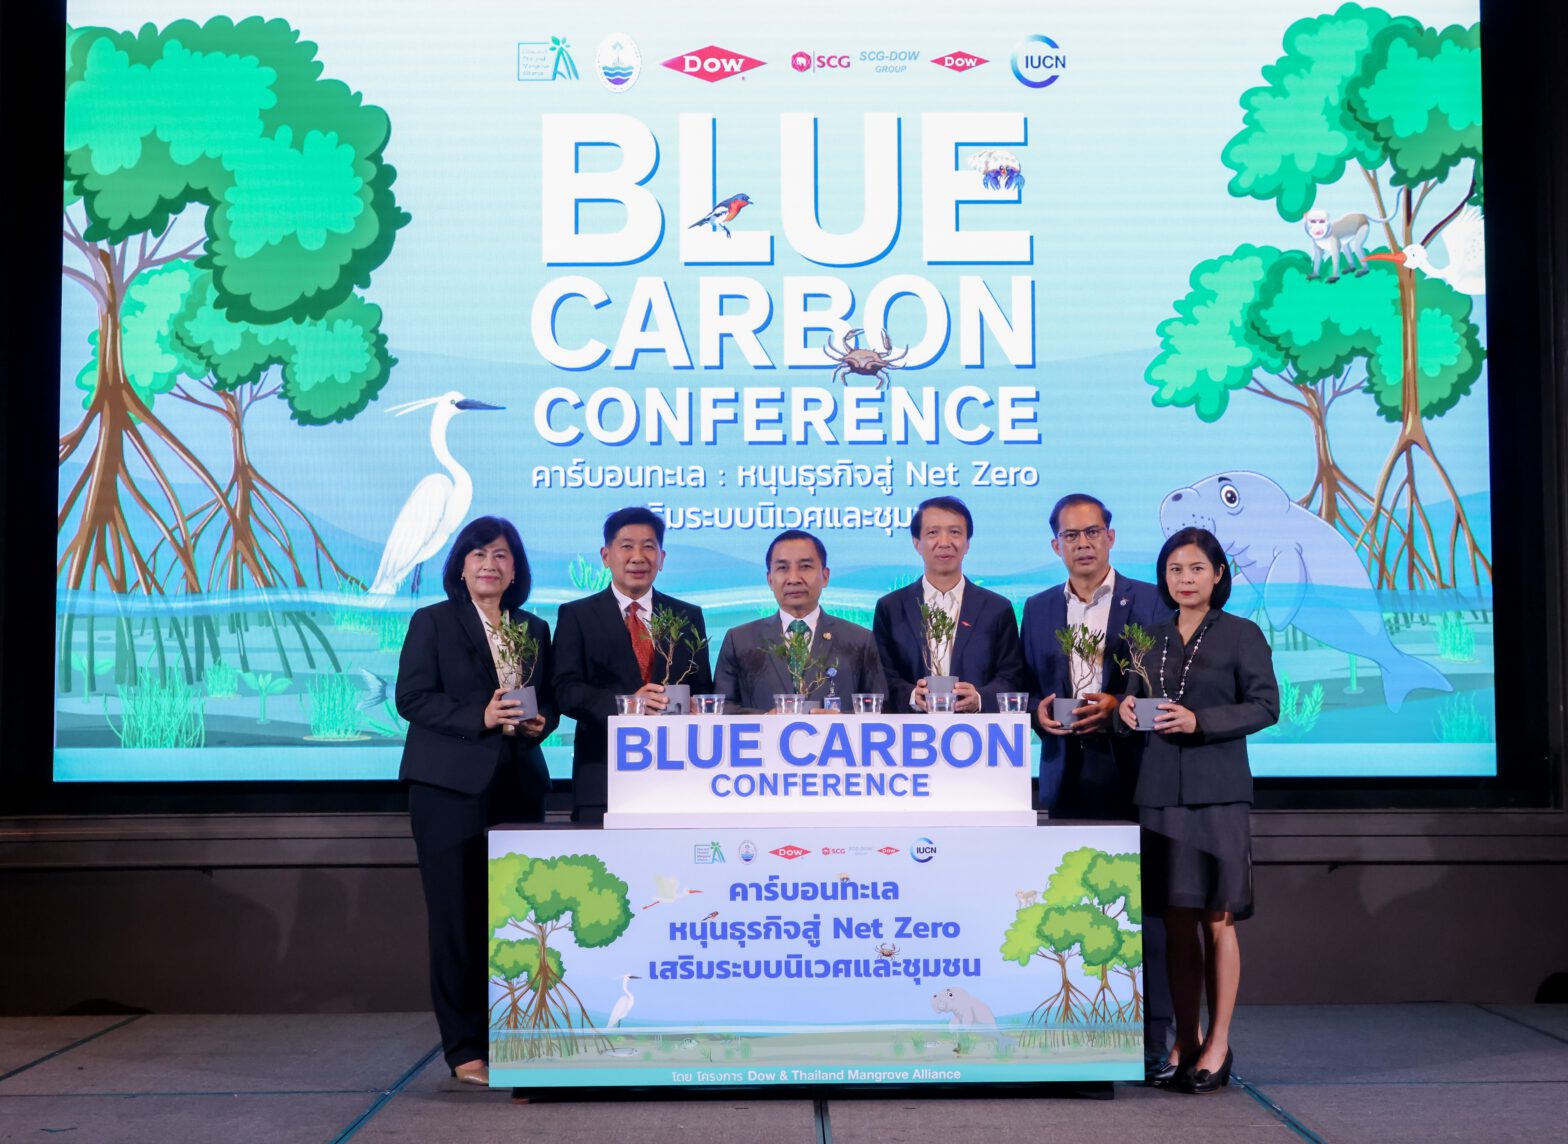 Blue Carbon Conference คาร์บอนทะเล: หนุนธุรกิจสู่ Net Zero เสริมระบบนิเวศและชุมชน